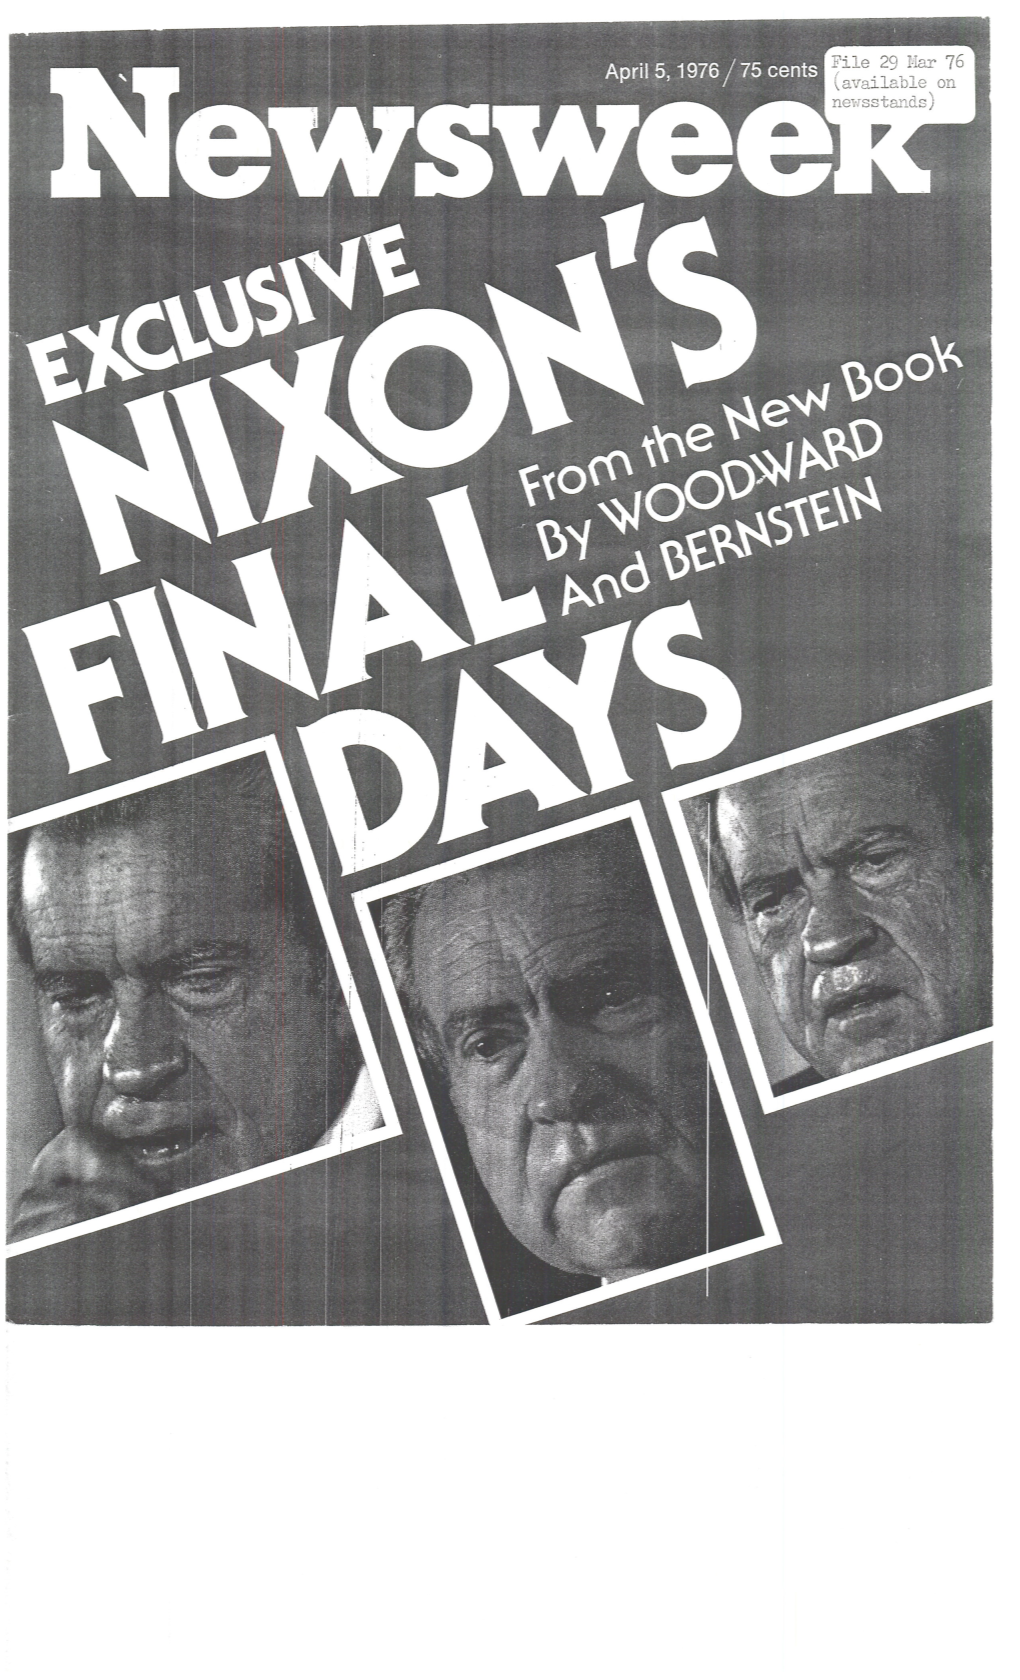 Richard Nixon's Final Days